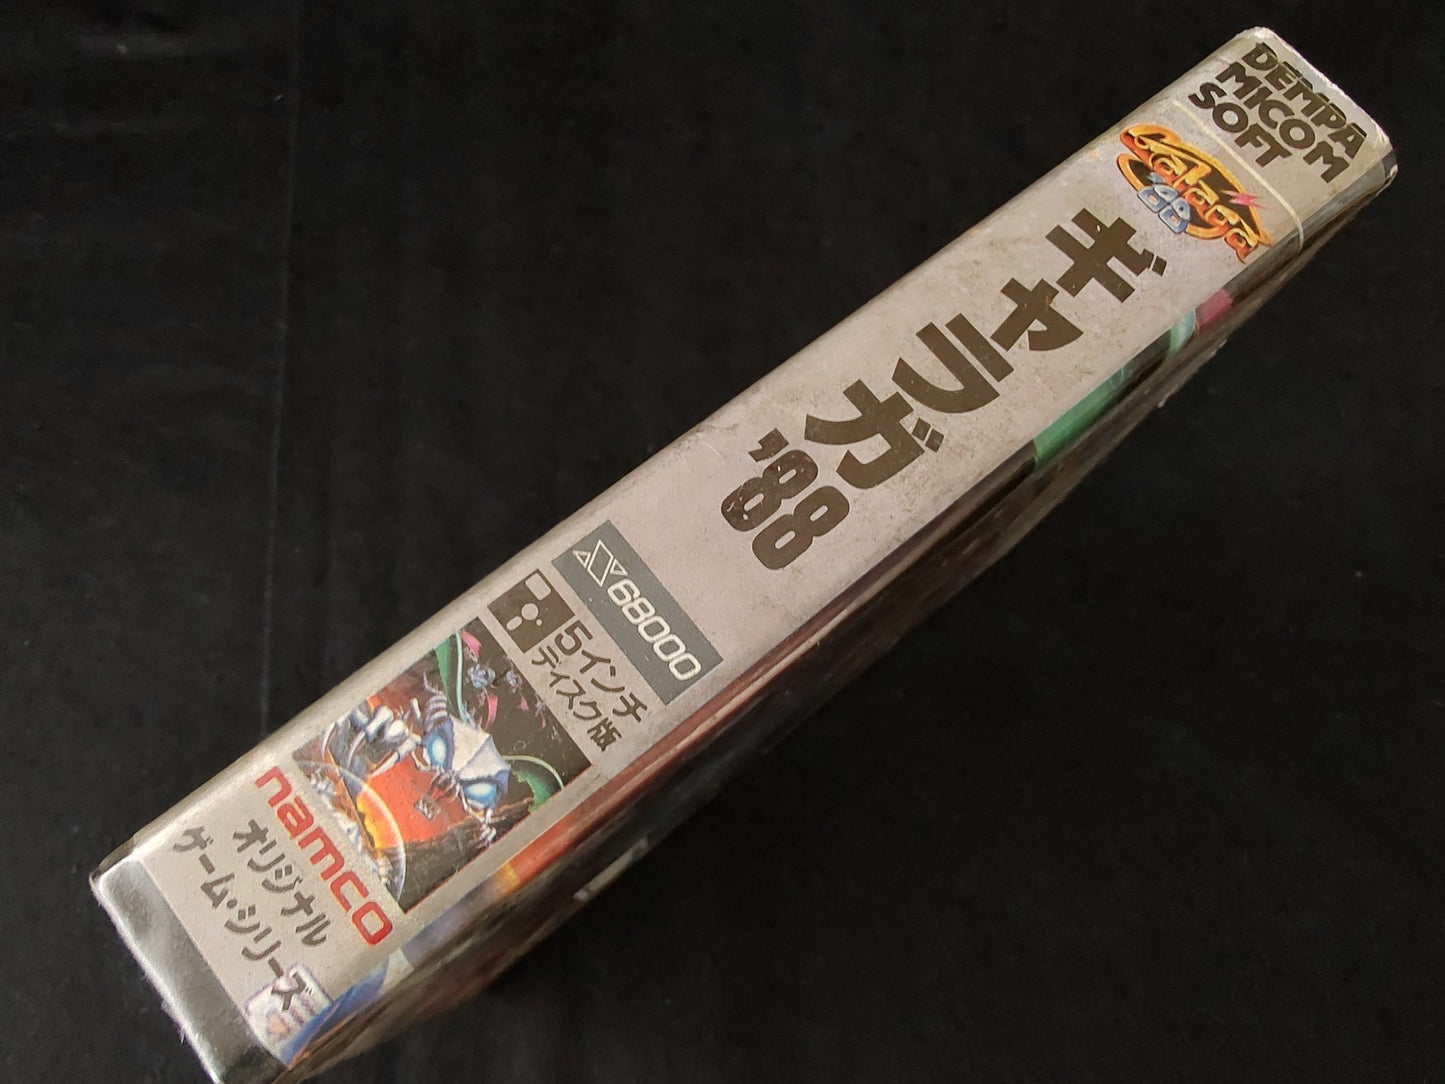 Galaga '88 SHARP X68000 Arcade Game w/Manual, and Box set, Working-f0612-